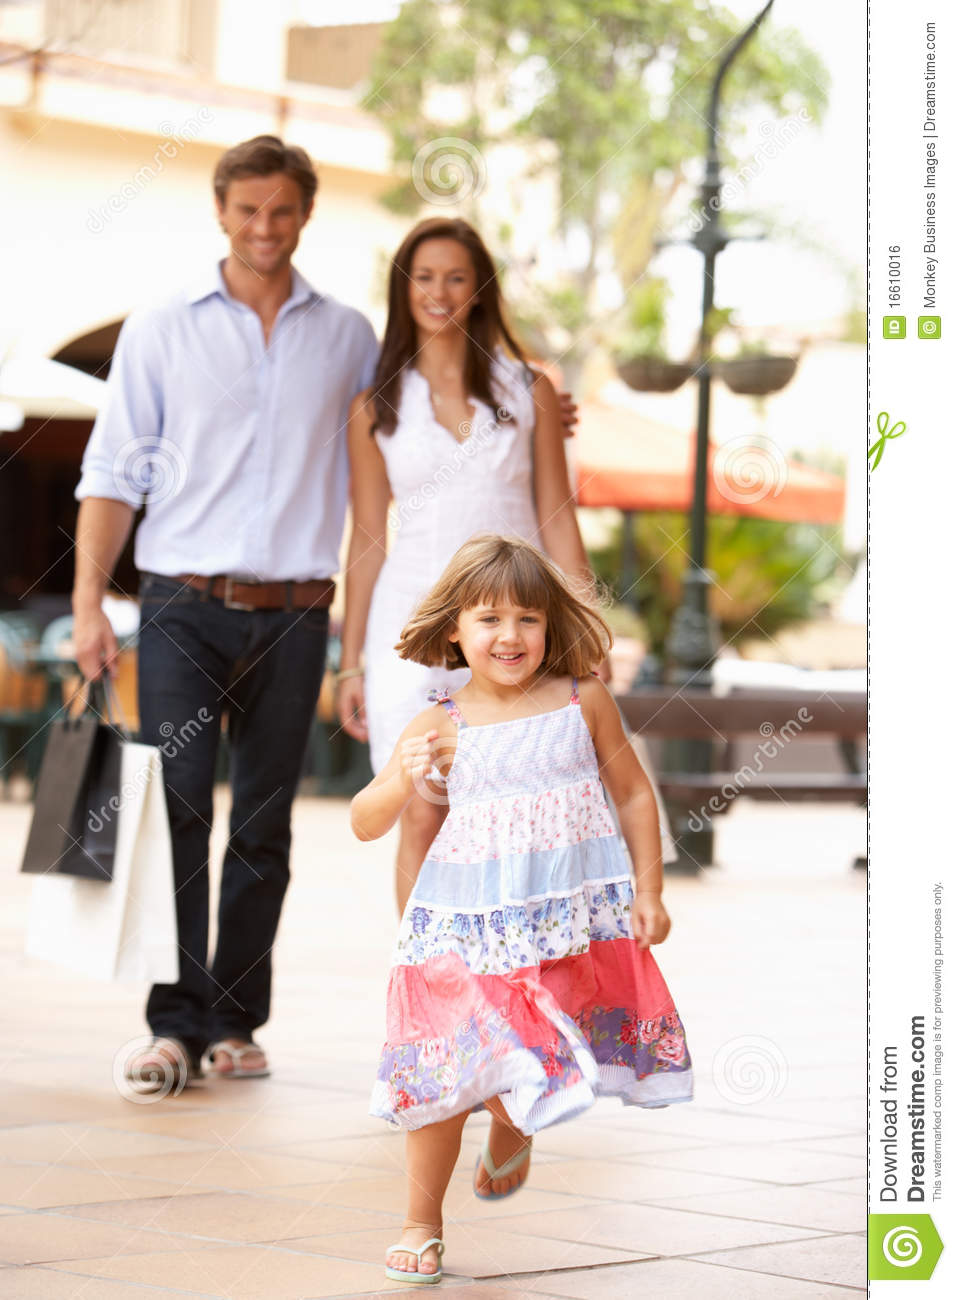 Young Family Enjoying Shopping Trip Royalty Free Stock Image   Image    